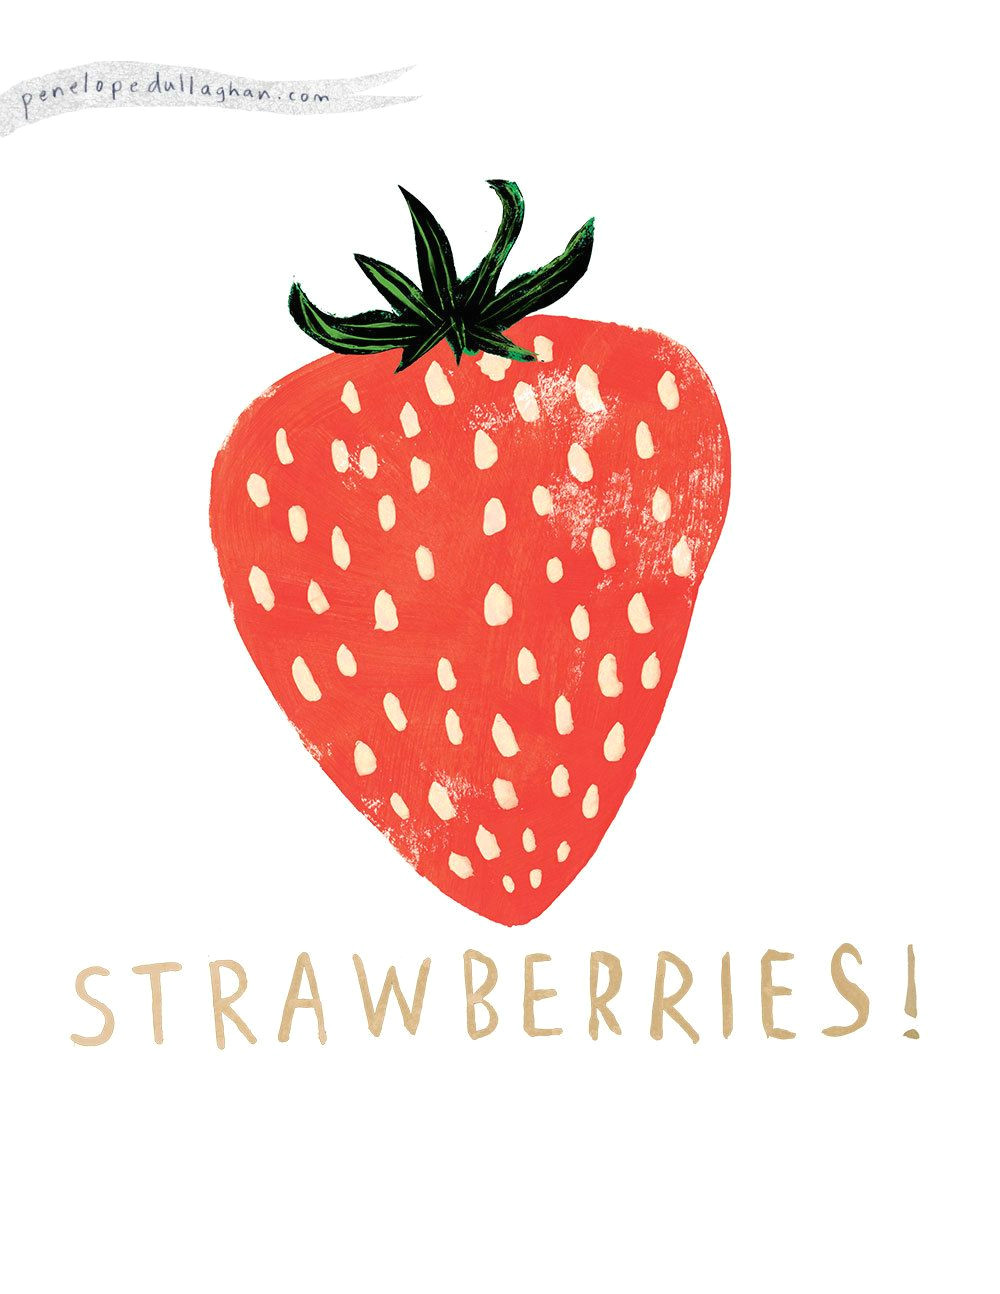 Easy Drawings Of Vegetables Strawberries Design Illustration Simple Food Drawing Design